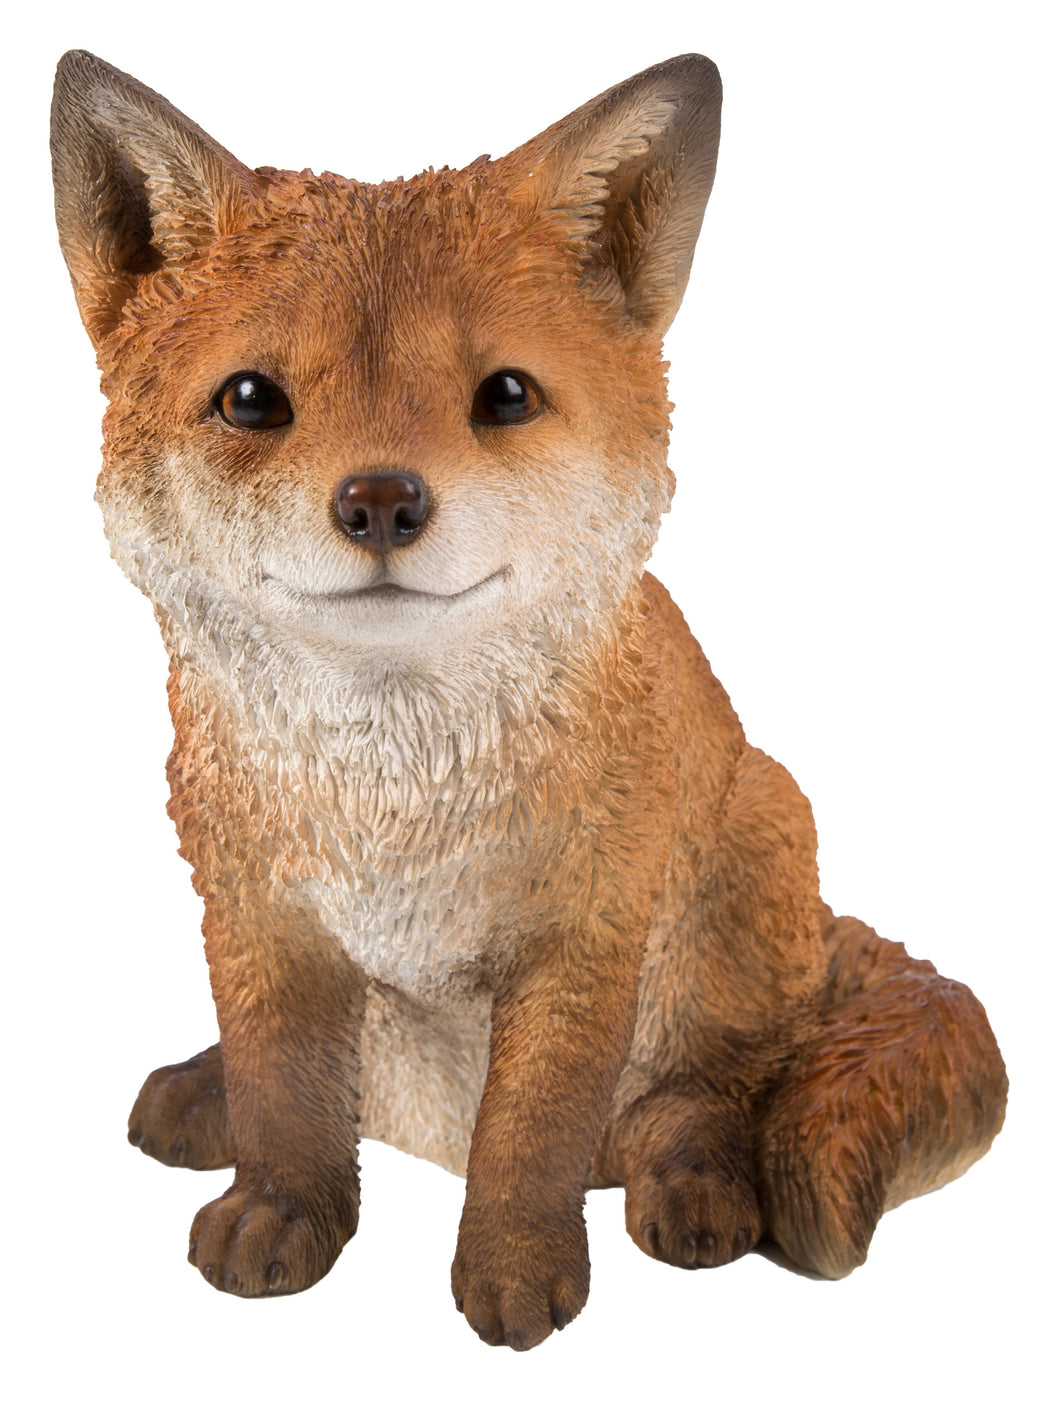 FOX PUP SITTING